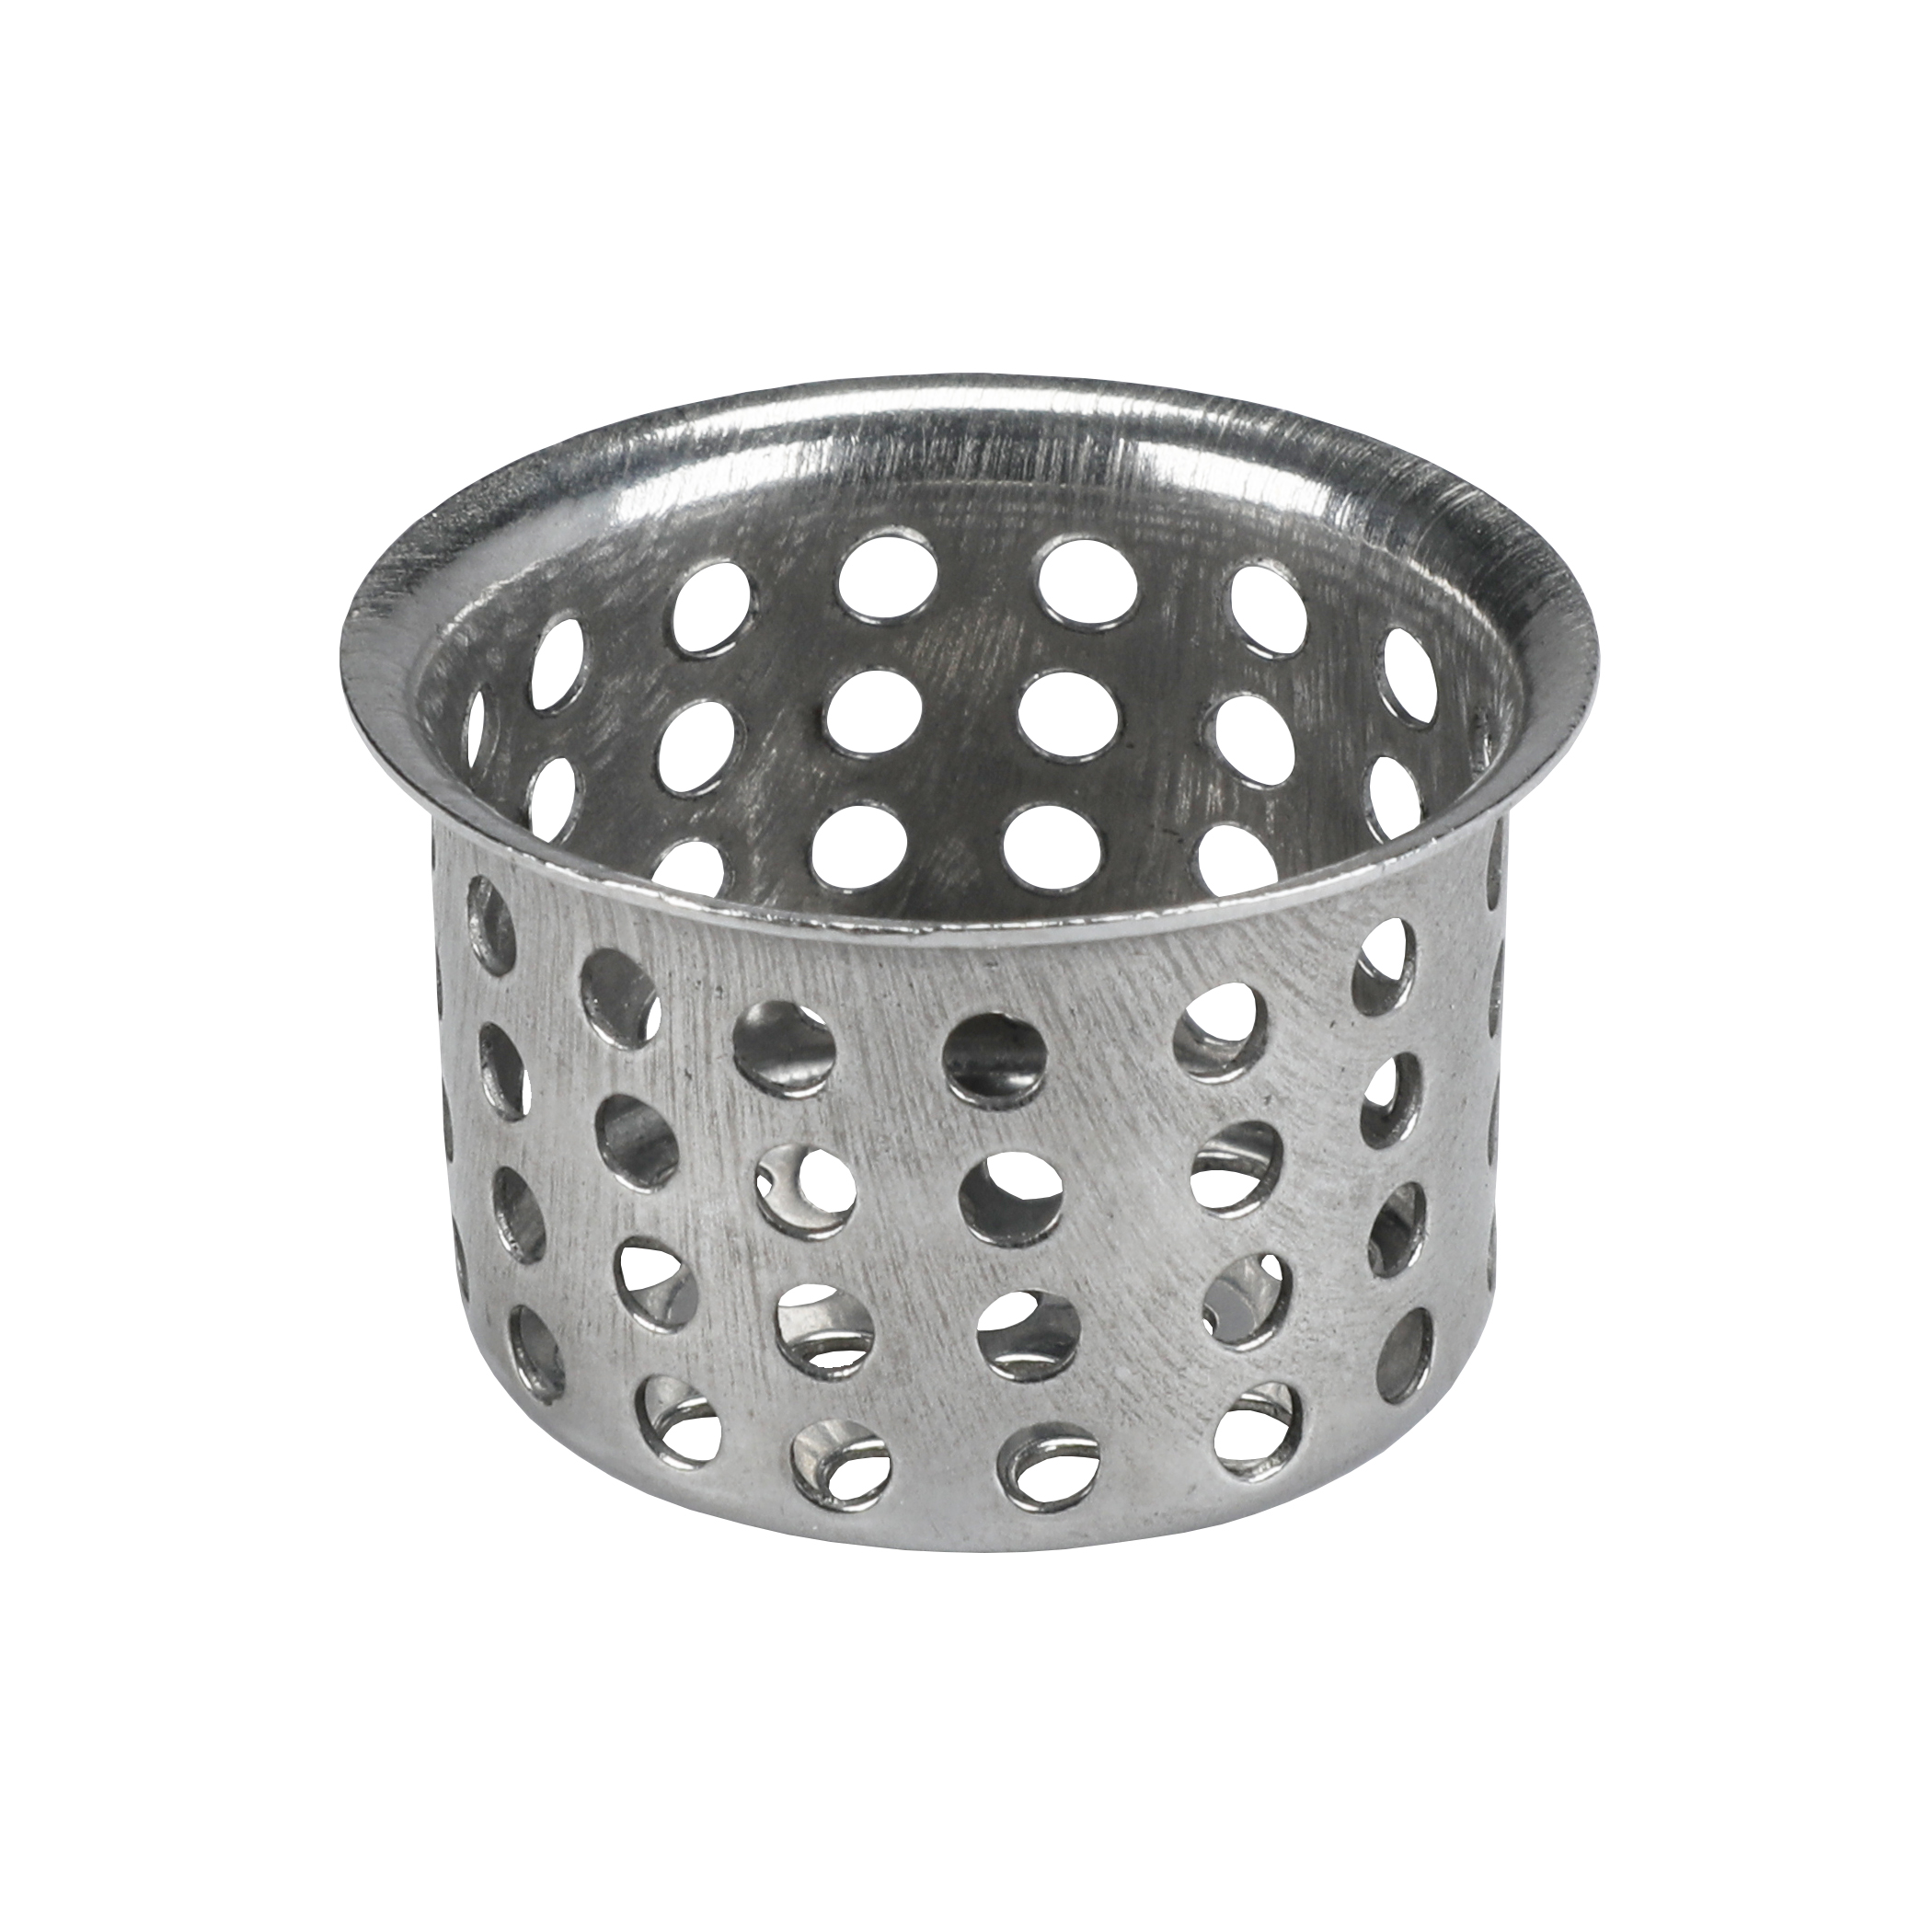 Stainless Sink Strainer Basket